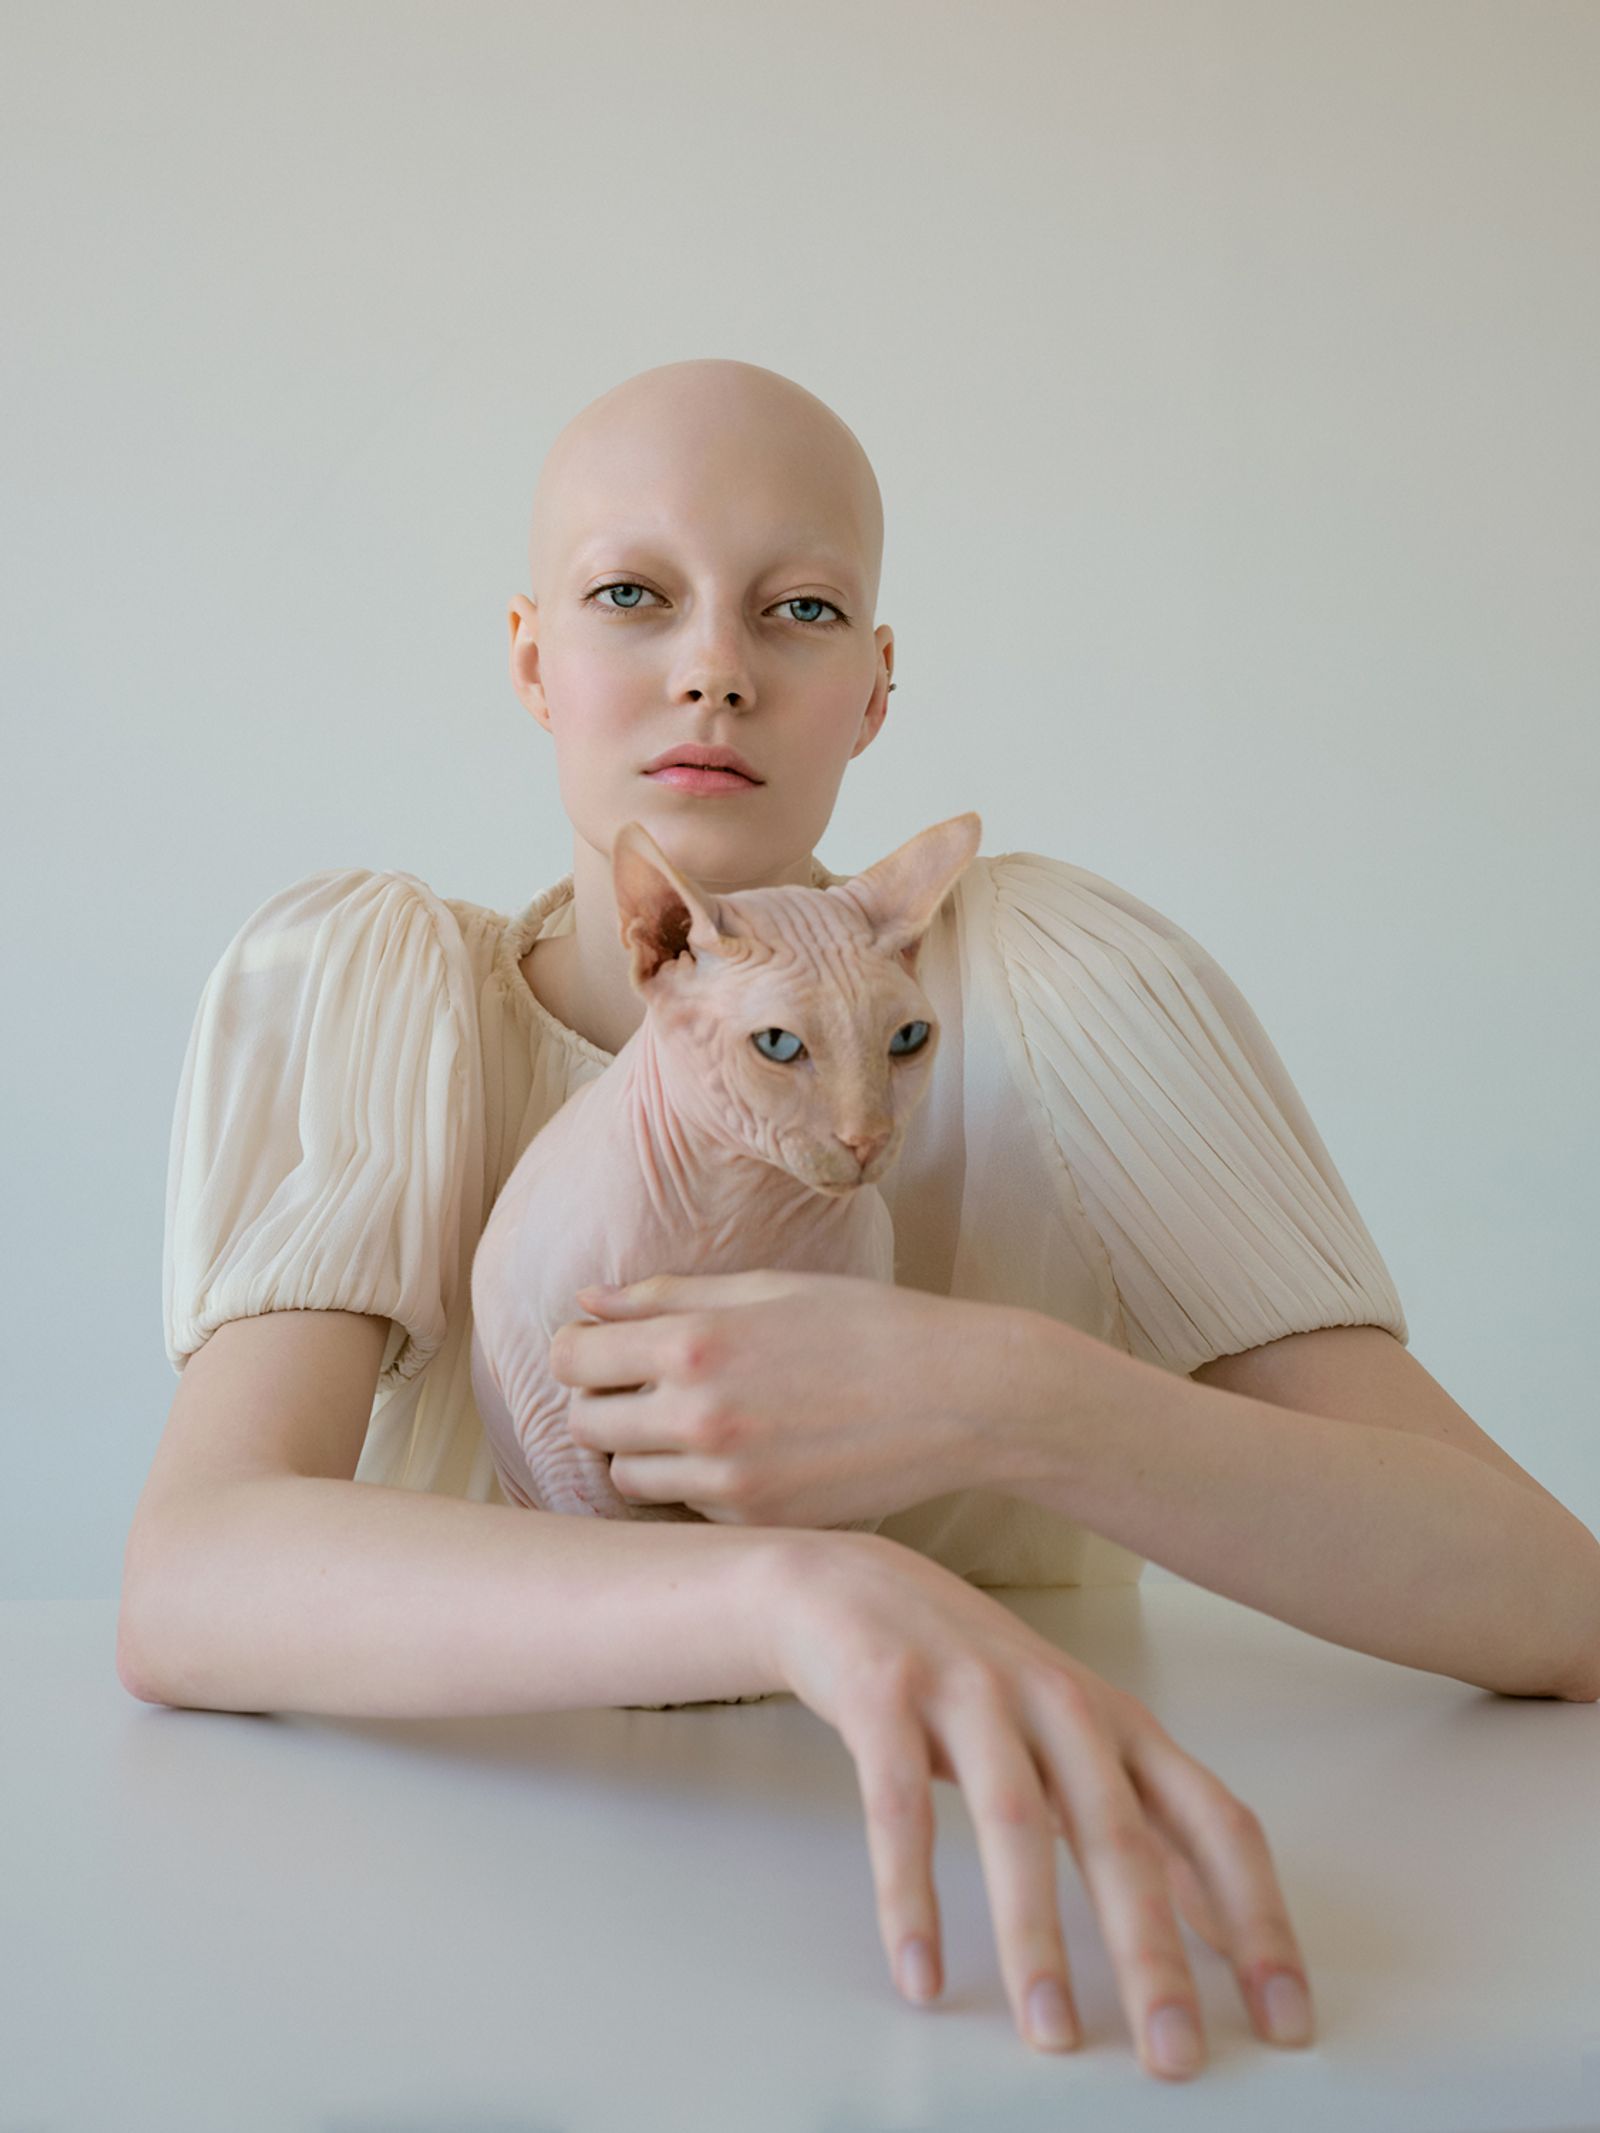 © Kristina Varaksina - Image from the Female portraits photography project